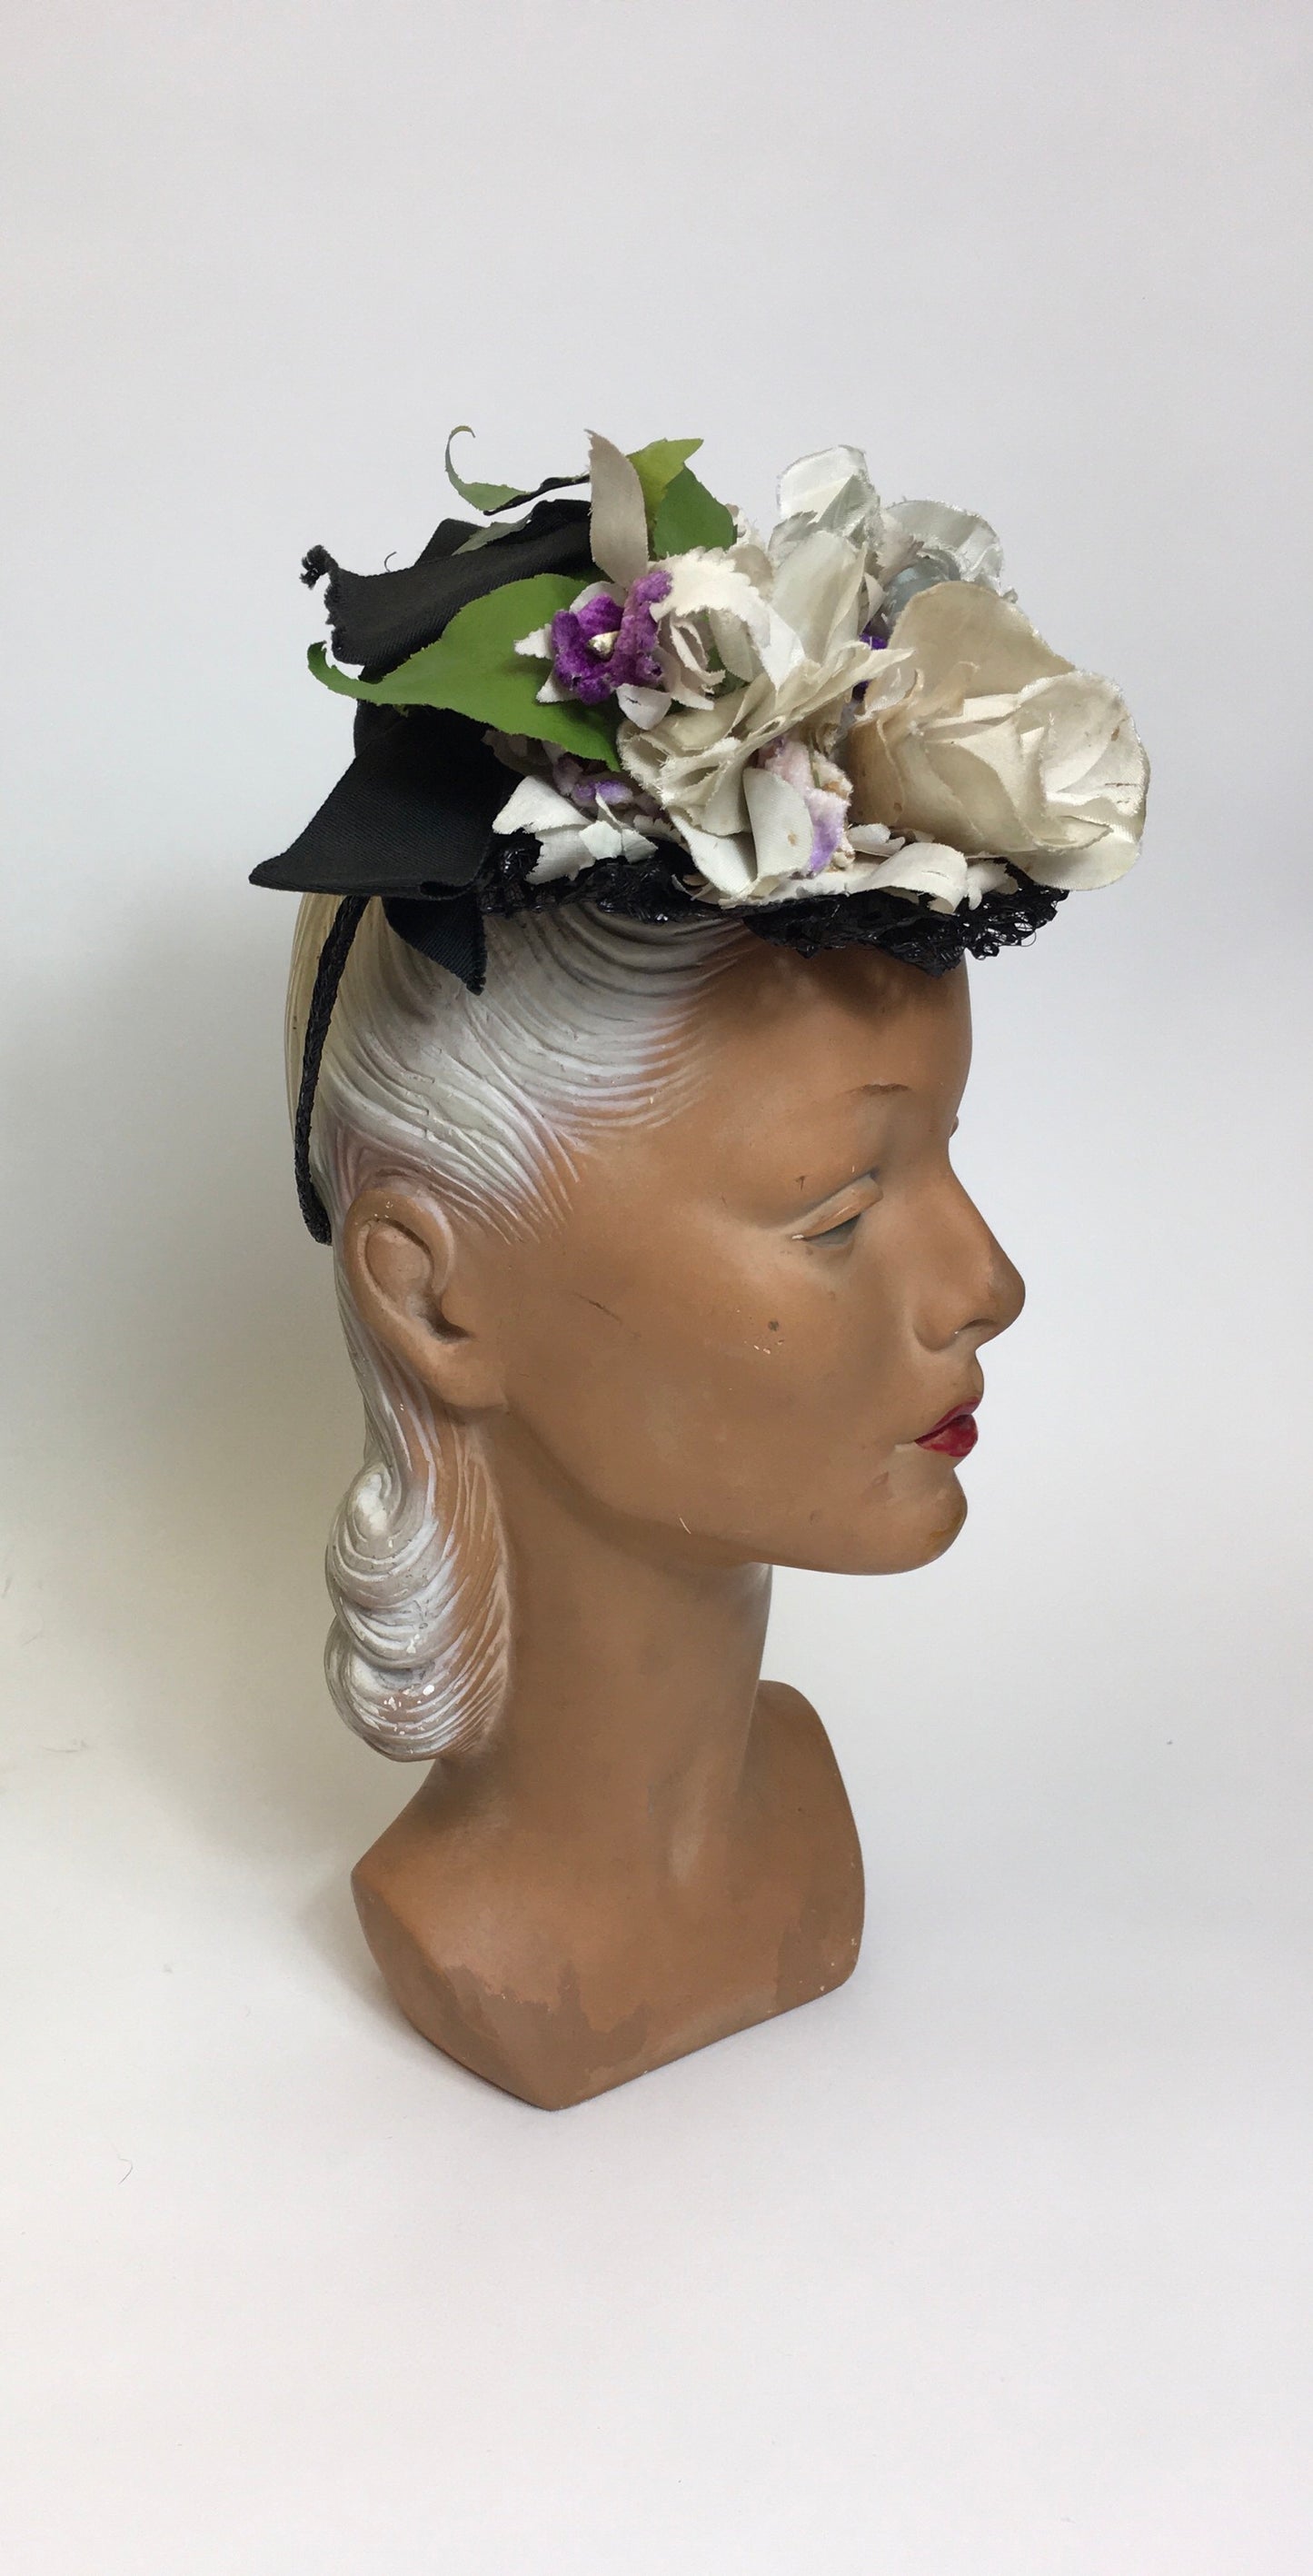 Original 1940’s Floral Tilt Hat - Beautiful Floral Adornments in Powder Blues , Purples & Ivory